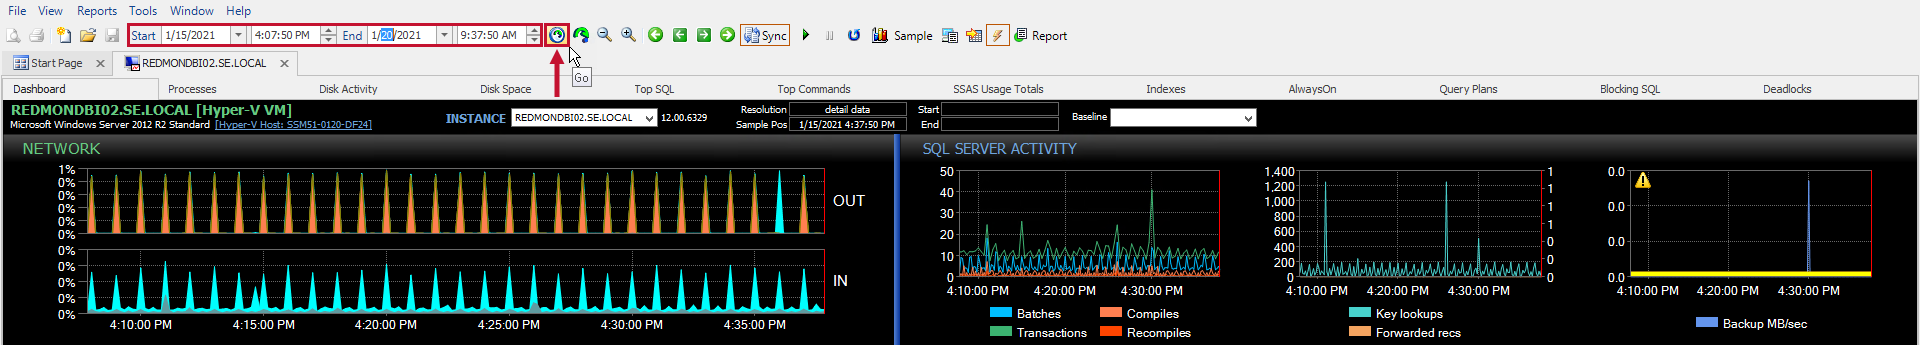 Performance Analysis Dashboard History mode time toolbar